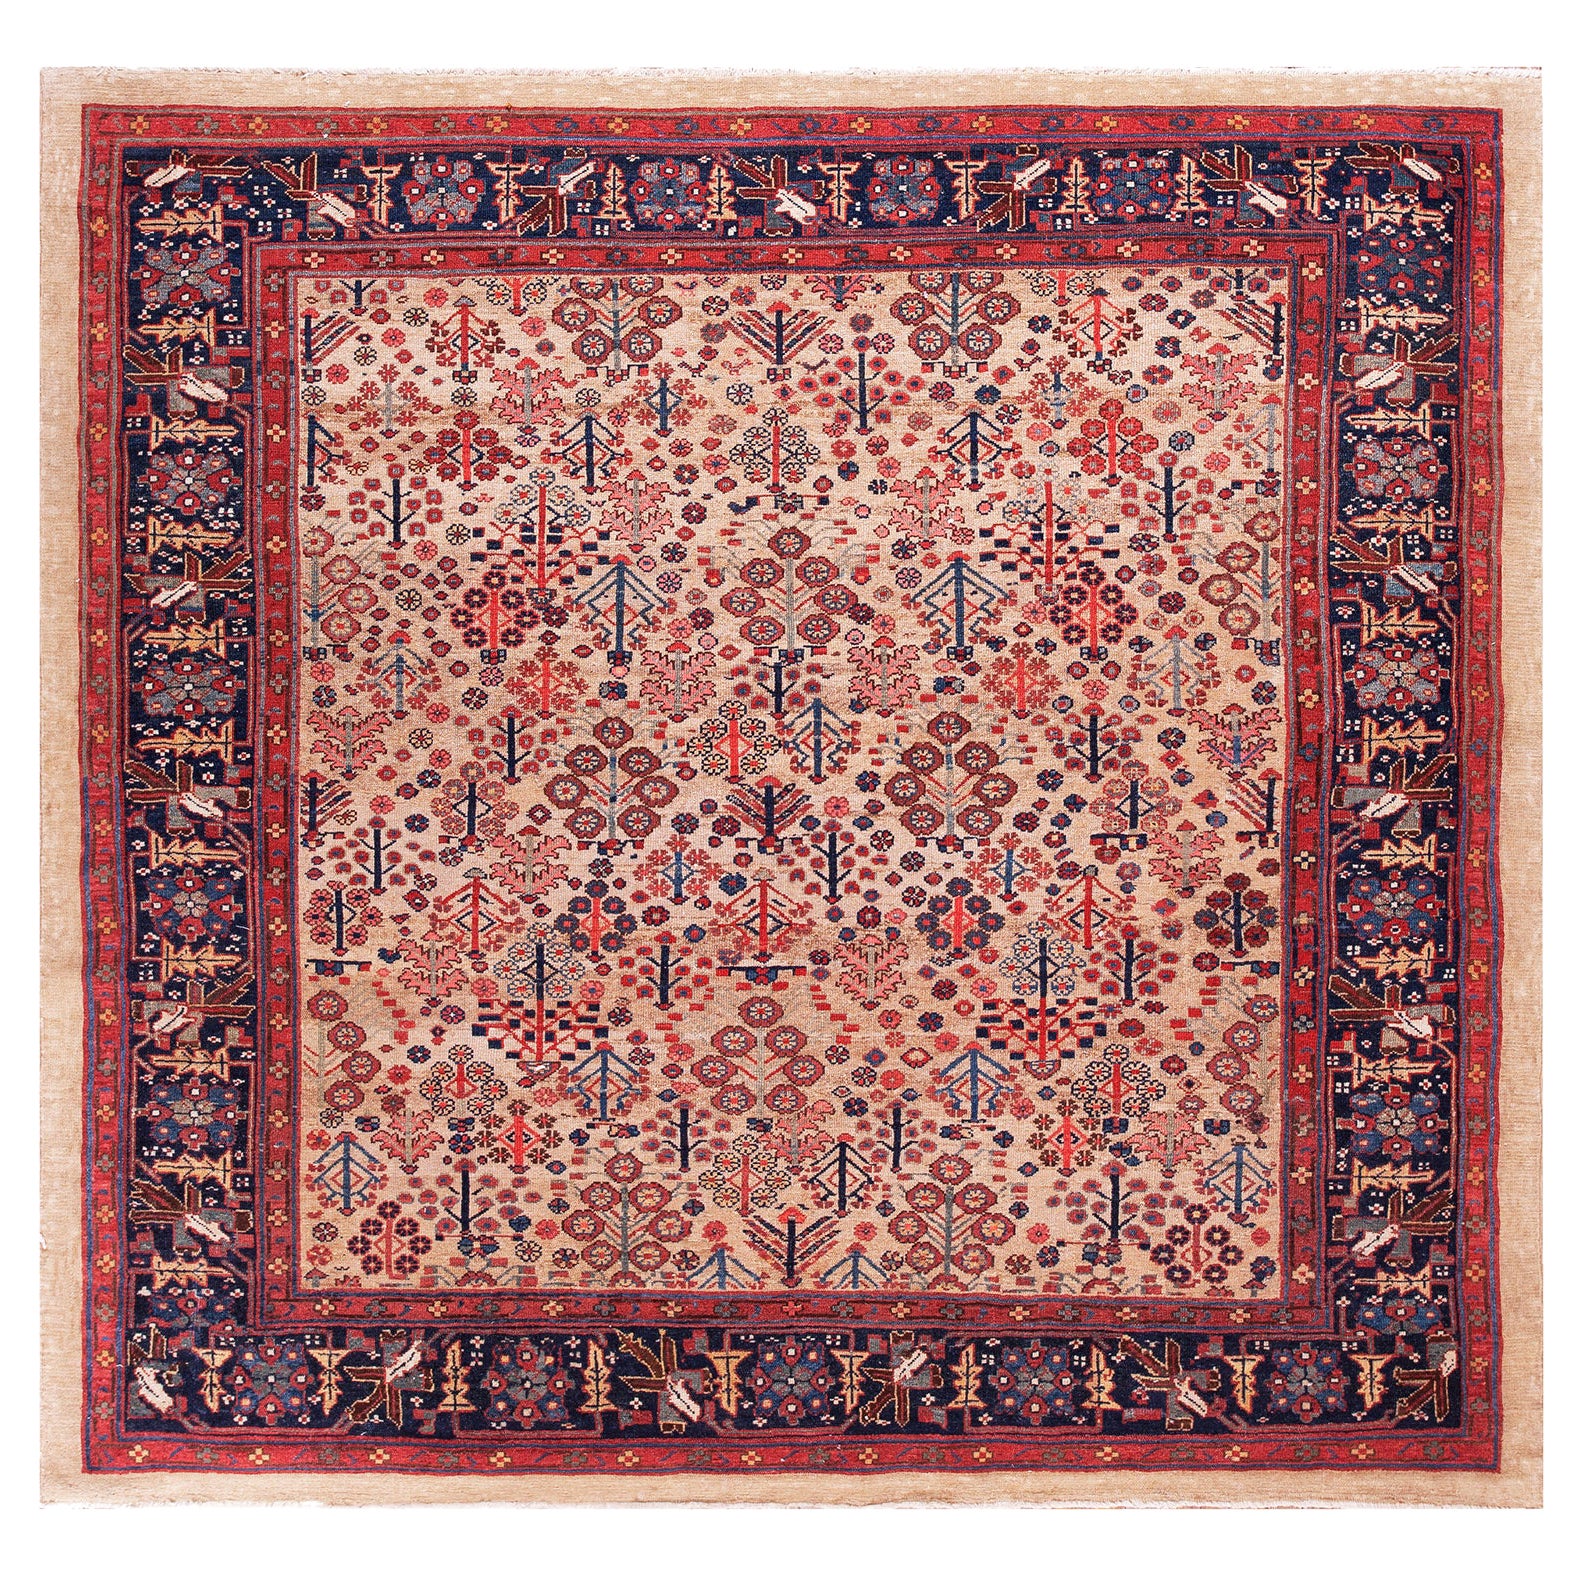 19th Century N.W. Persian "Bakshaiesh" Carpet ( 7'4" x 8' - 224 x 244 ) 